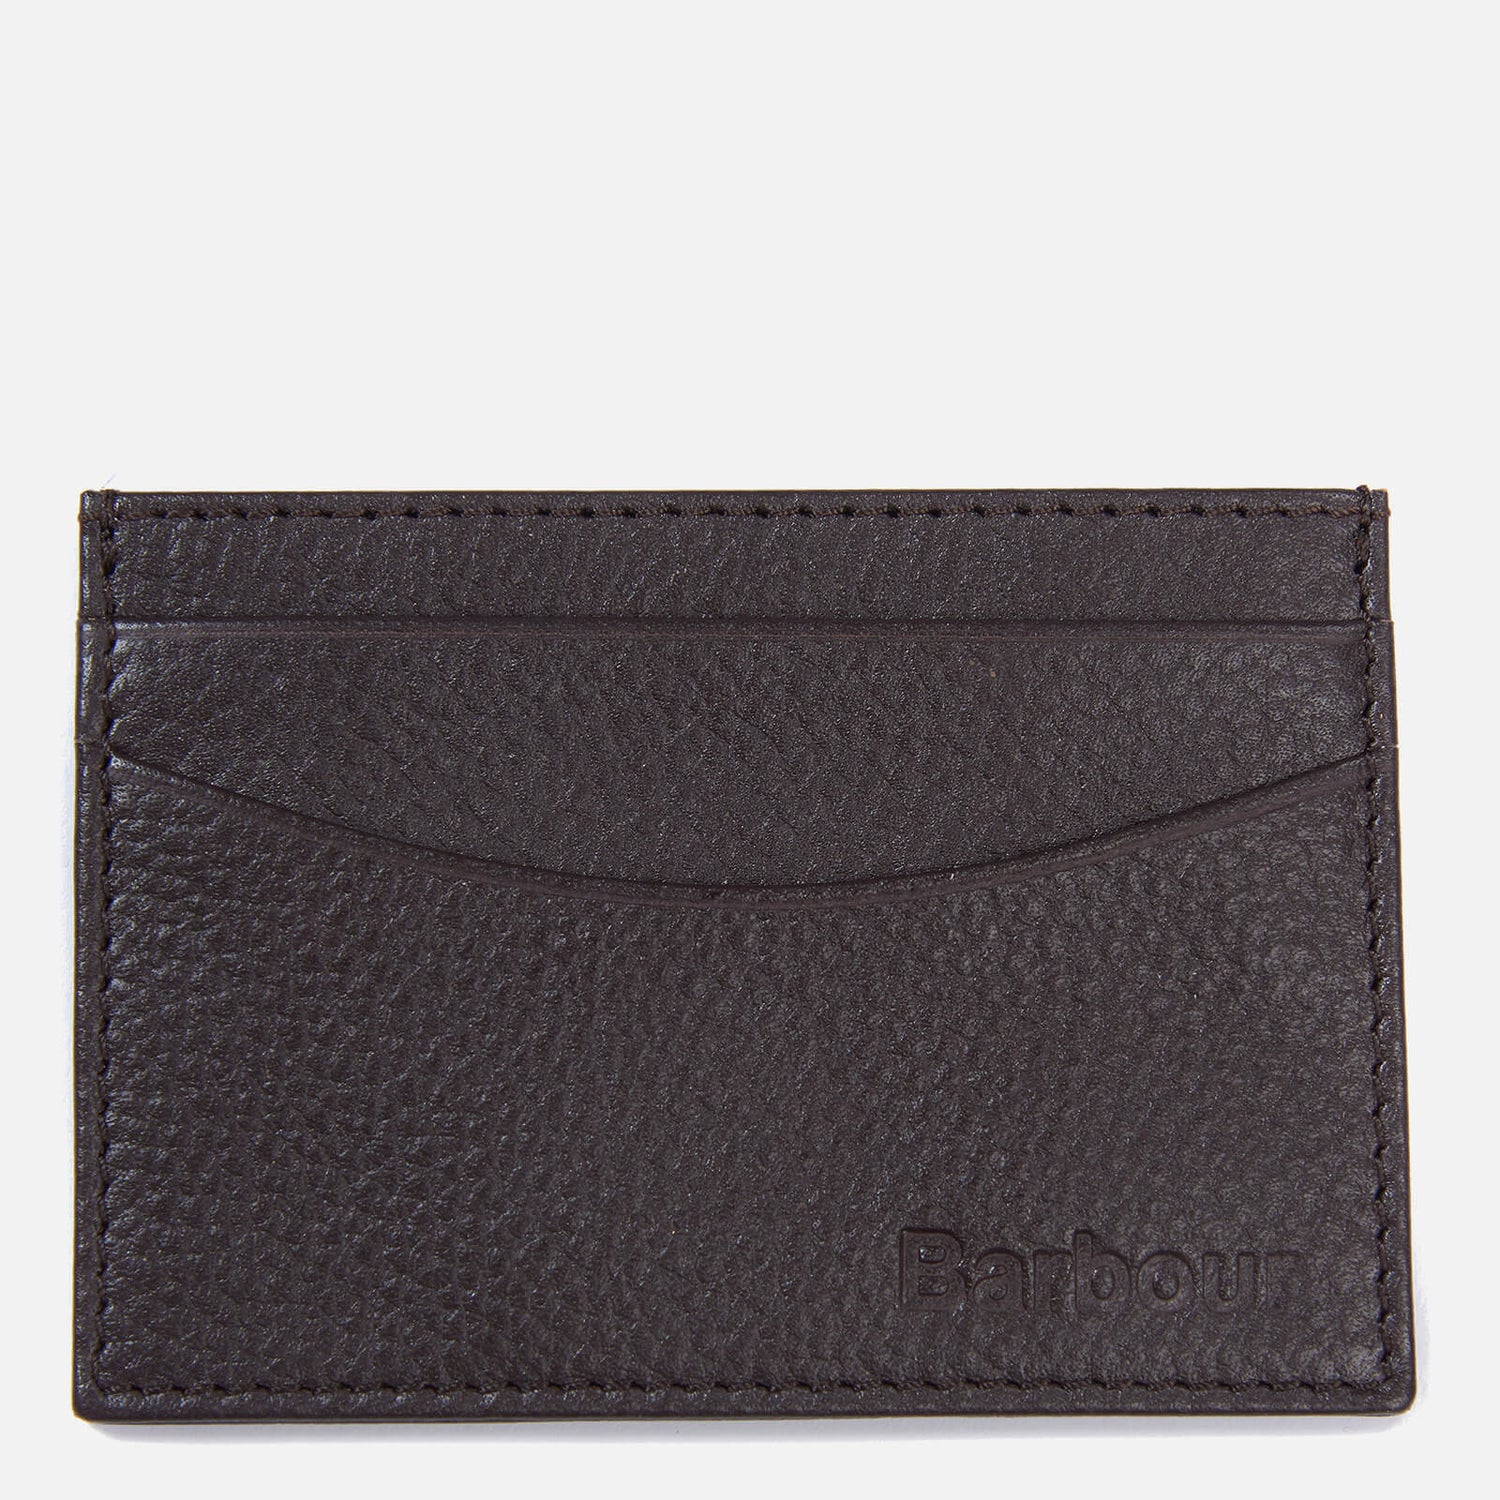 Barbour Men's Amble Leather Card Holder - Dark Brown